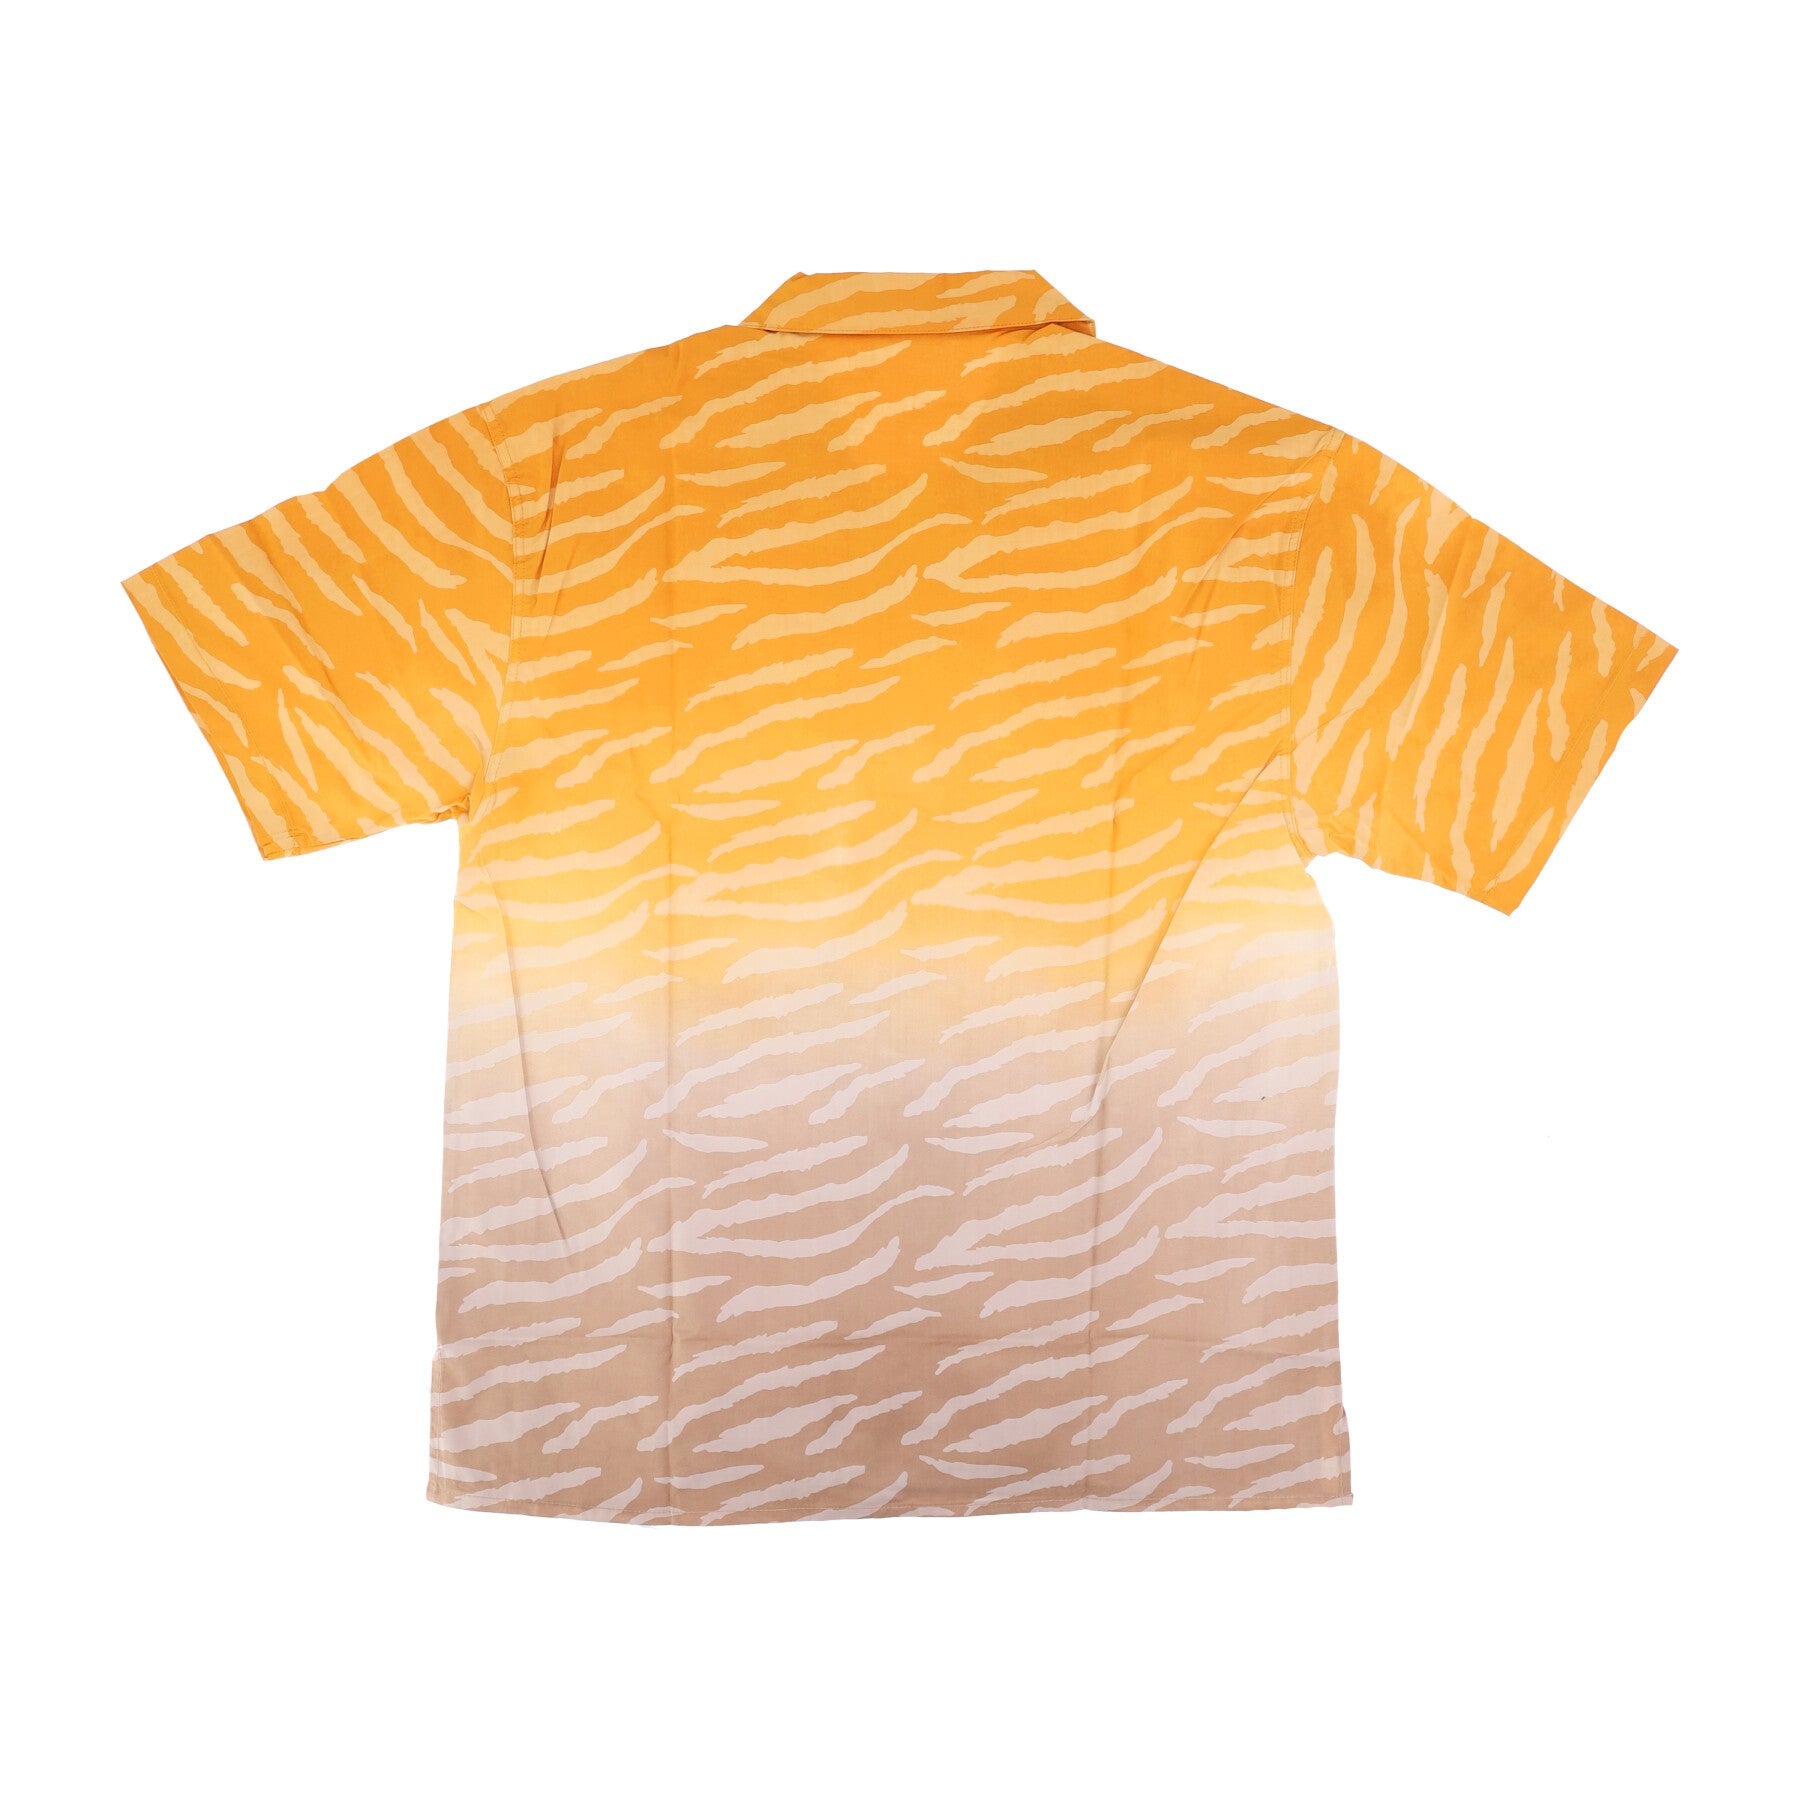 Men's Short Sleeve Shirt Animalier Degrade' Bowling Shirt Orange/sand